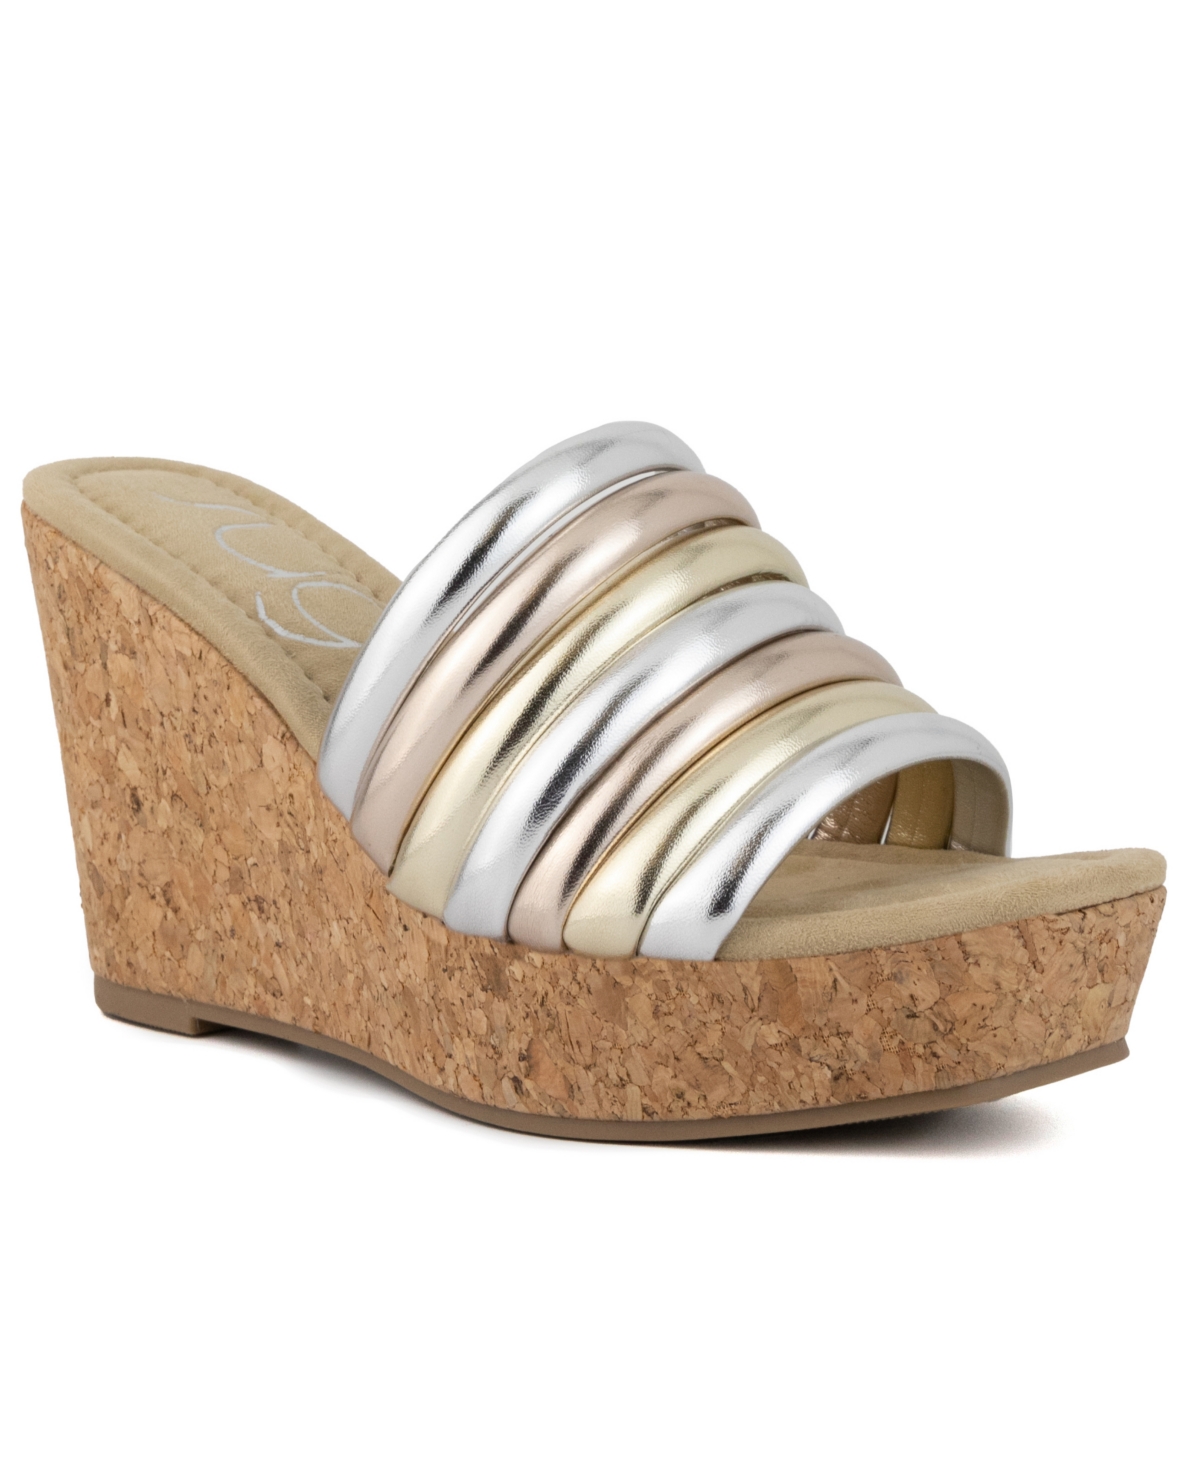  Sugar Women's Slide Sandal Knotted Upper Design Cushioned Open  Toe Slip On Sandals - Olena White 6